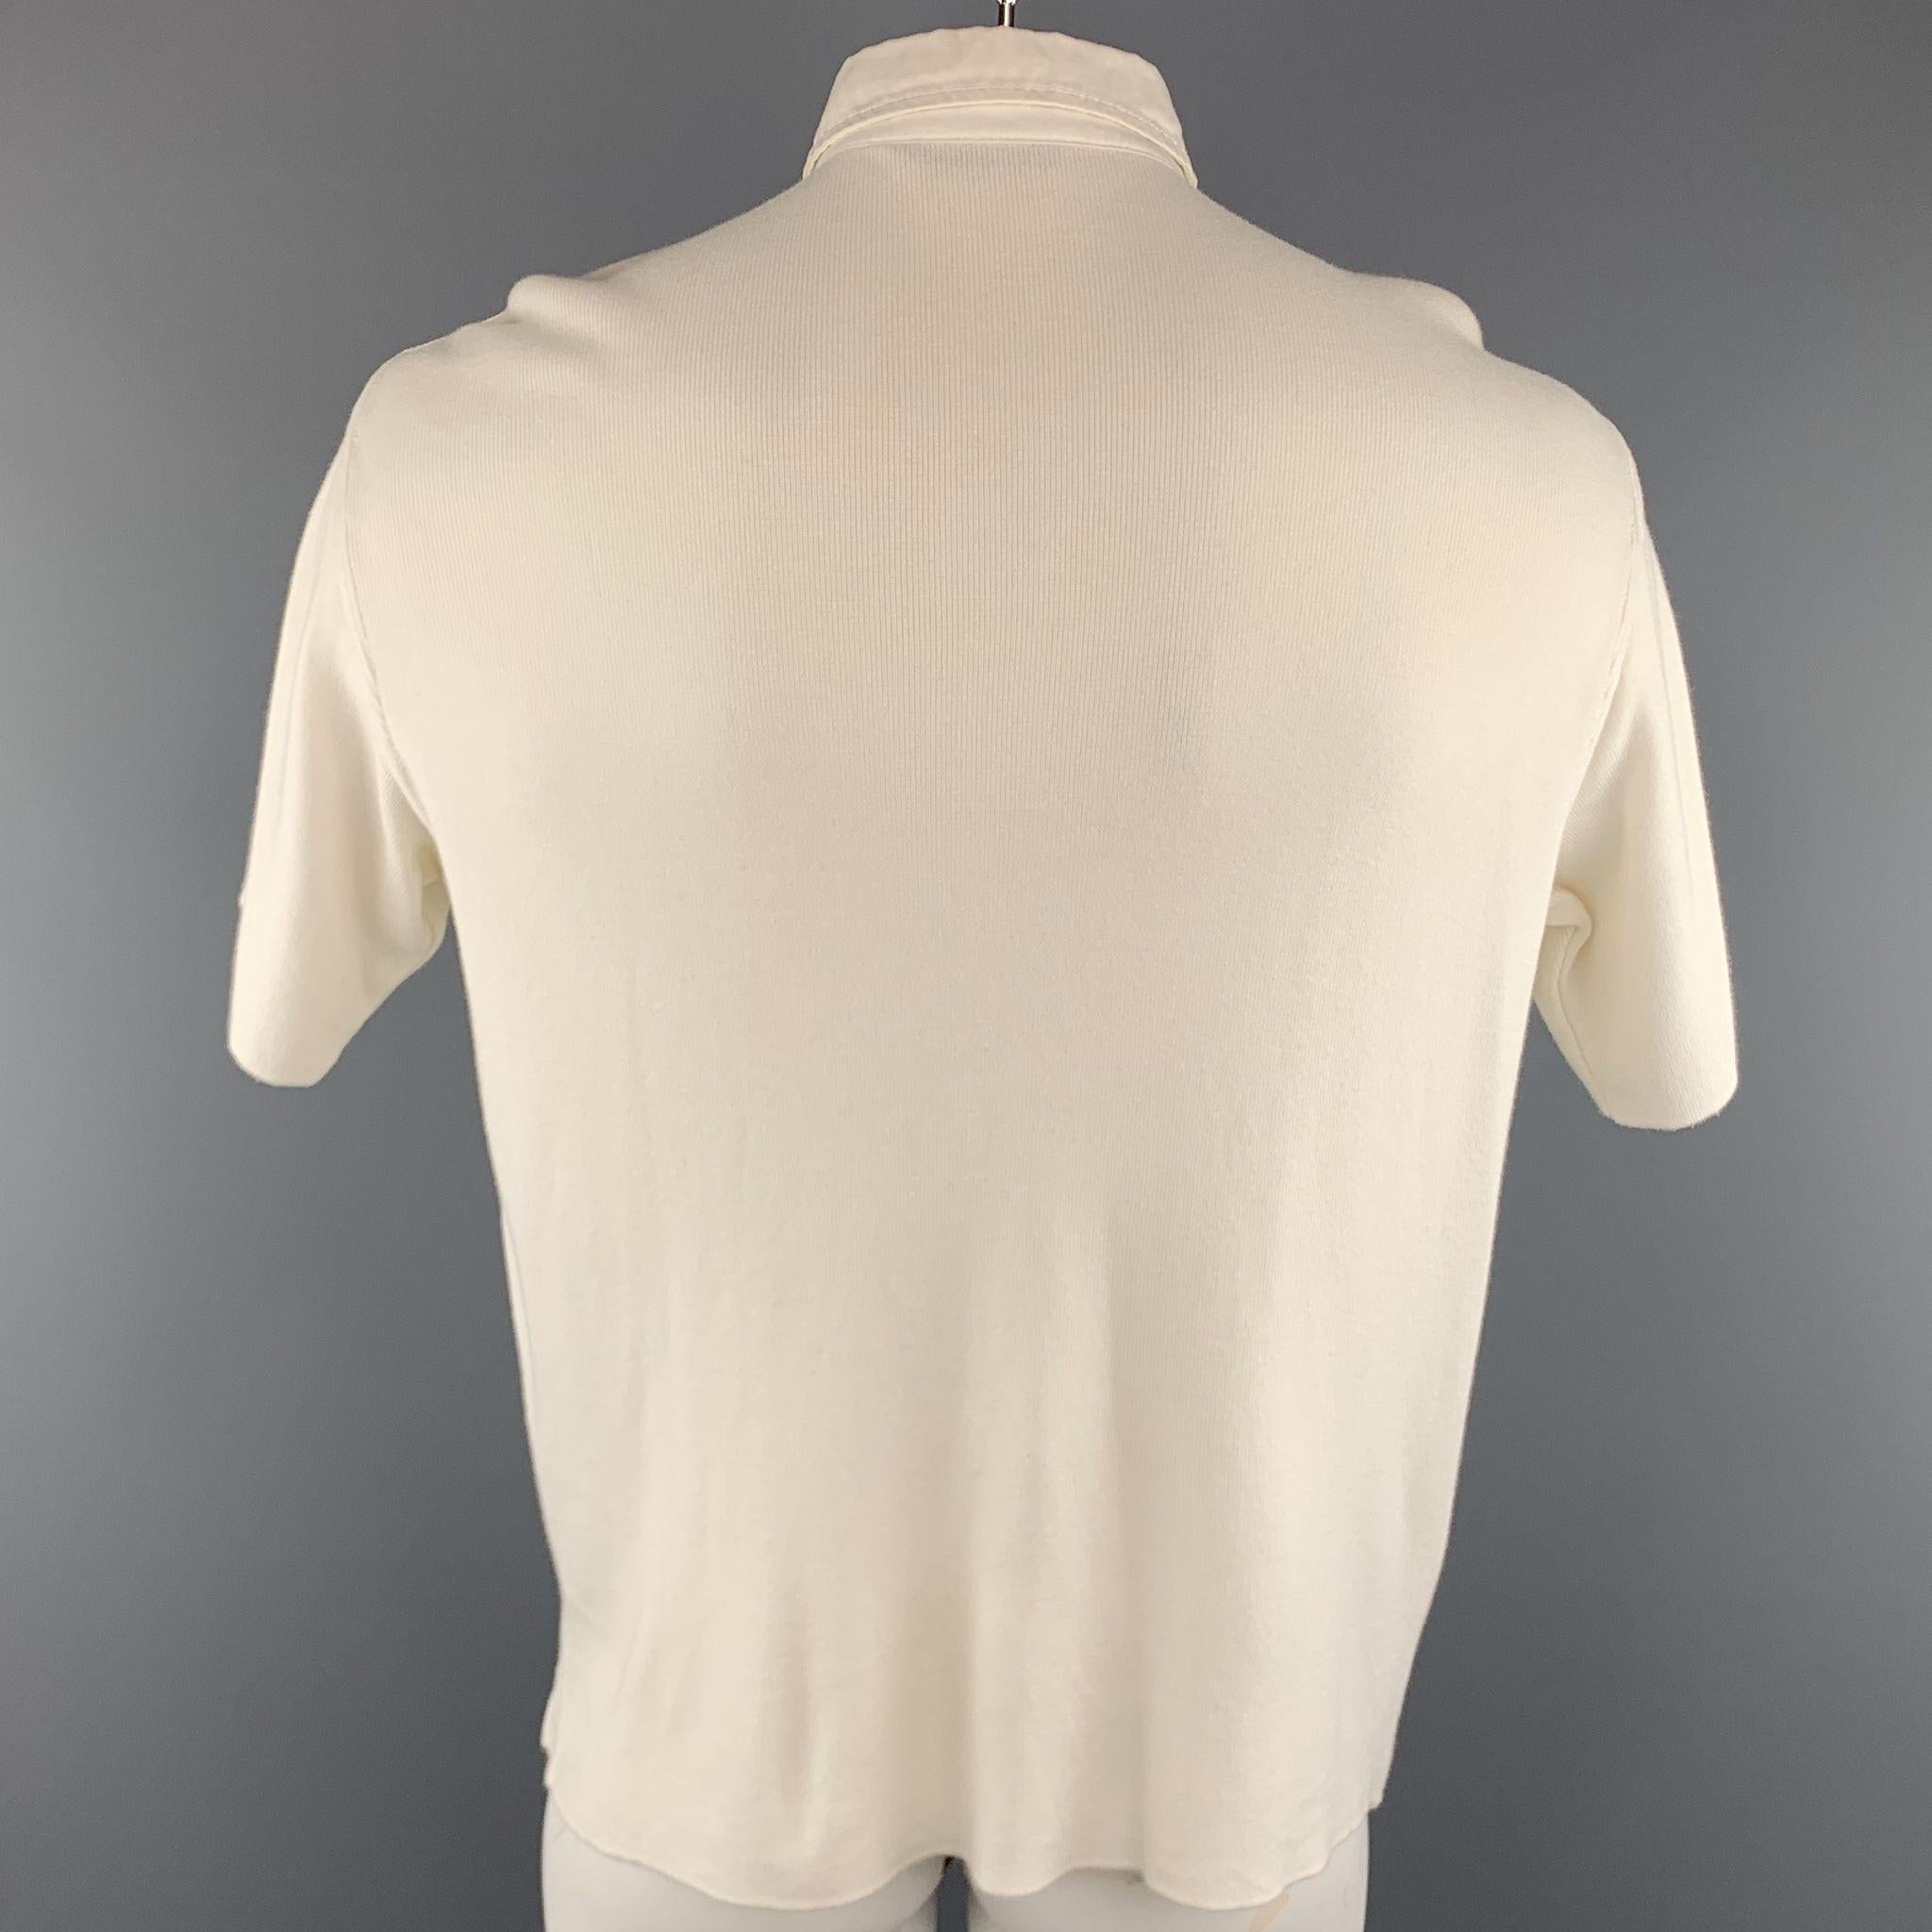 Men's MONTANA Size L Off White Solid Cotton Button Up Short Sleeve Shirt